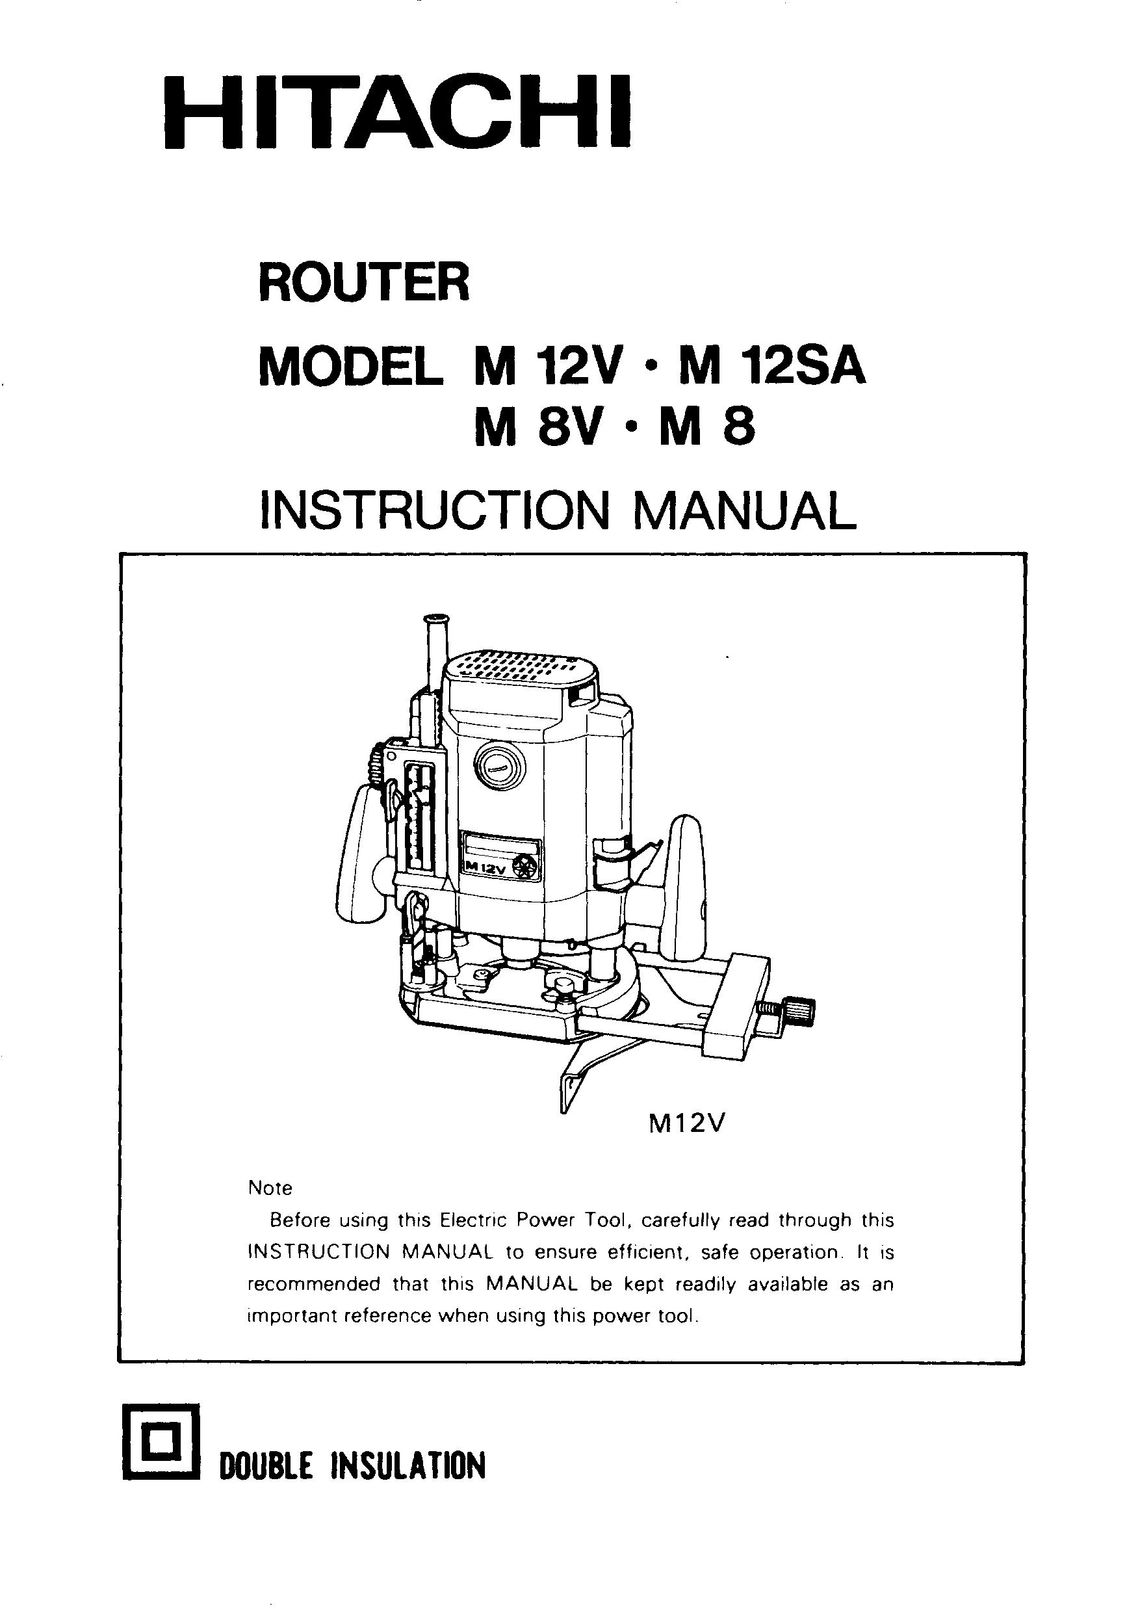 Hitachi M 12SA Router User Manual